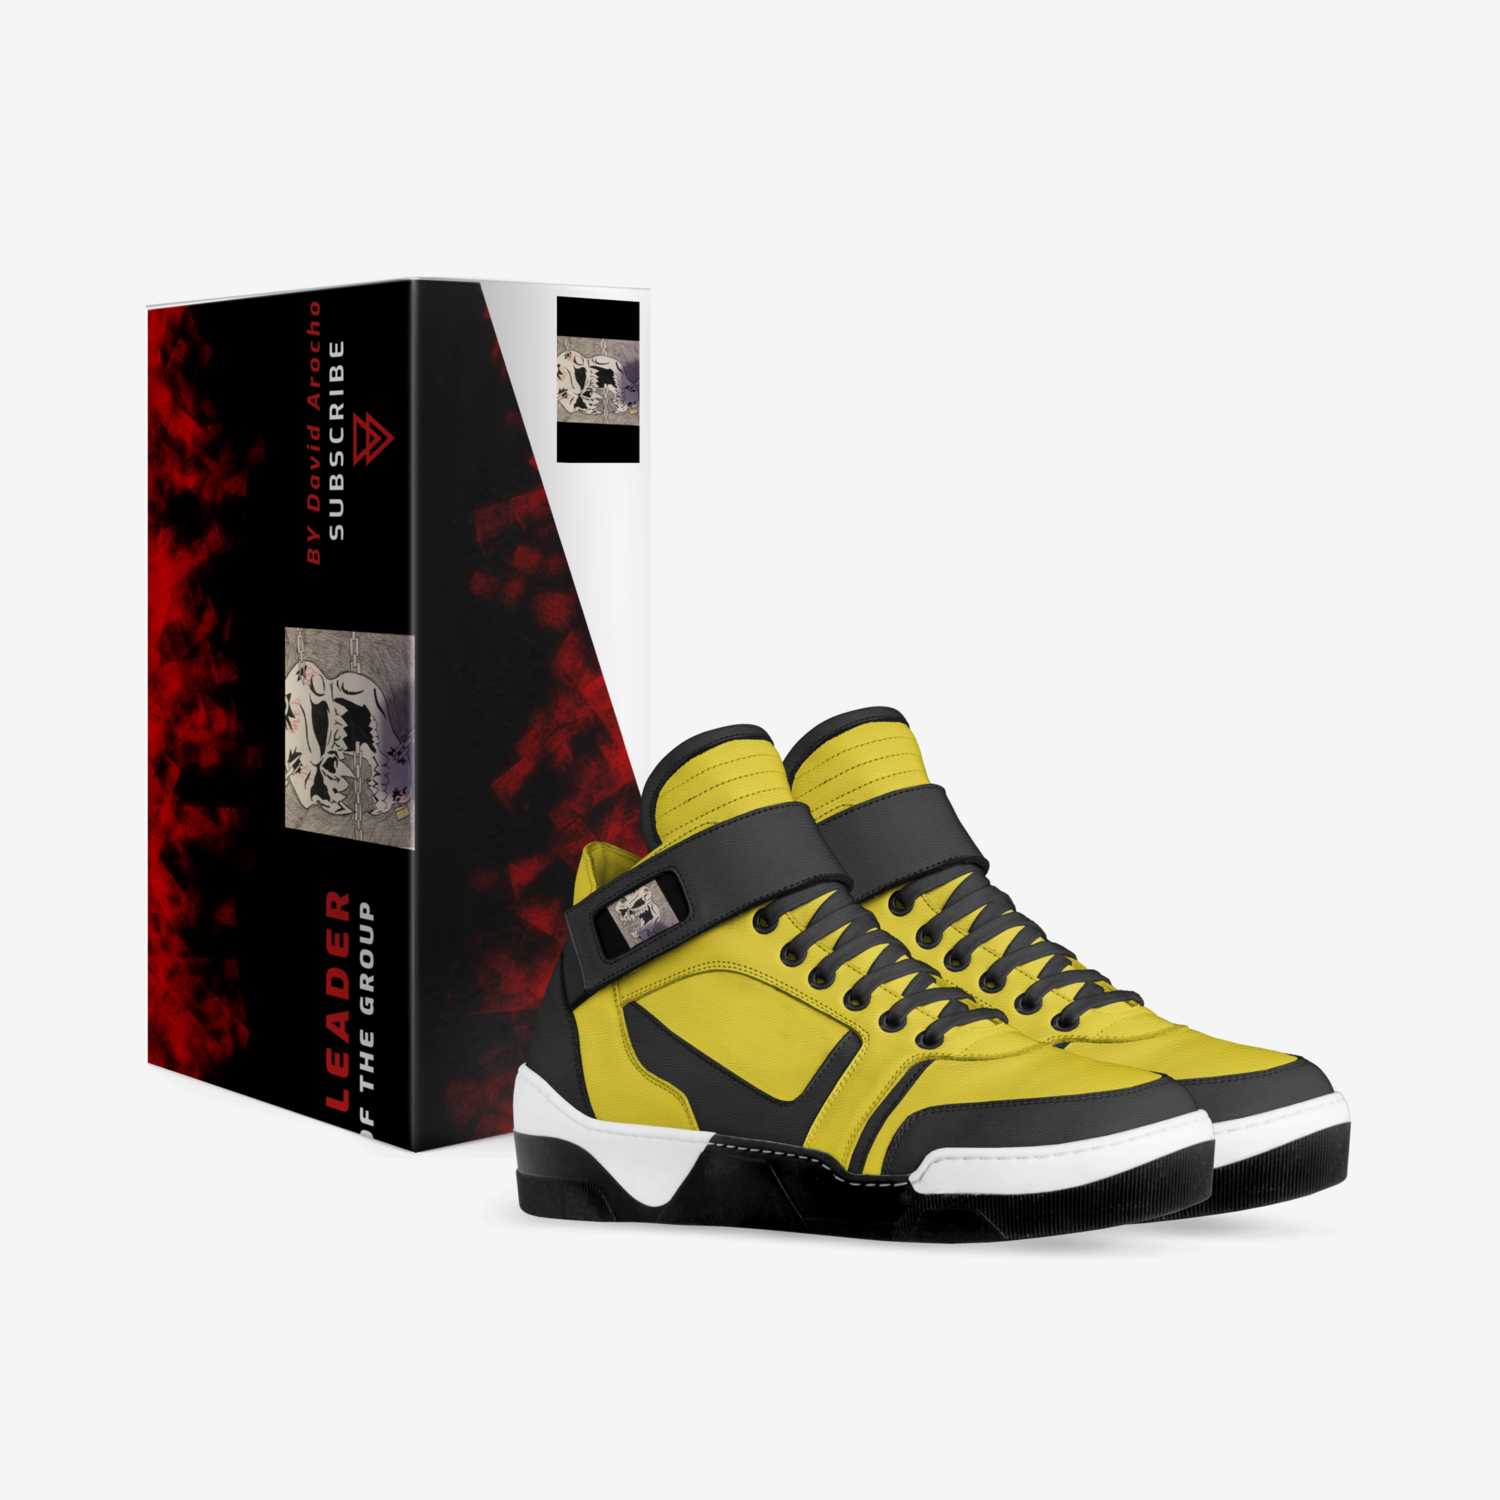 Deathlockkeeper custom made in Italy shoes by David Arocho | Box view